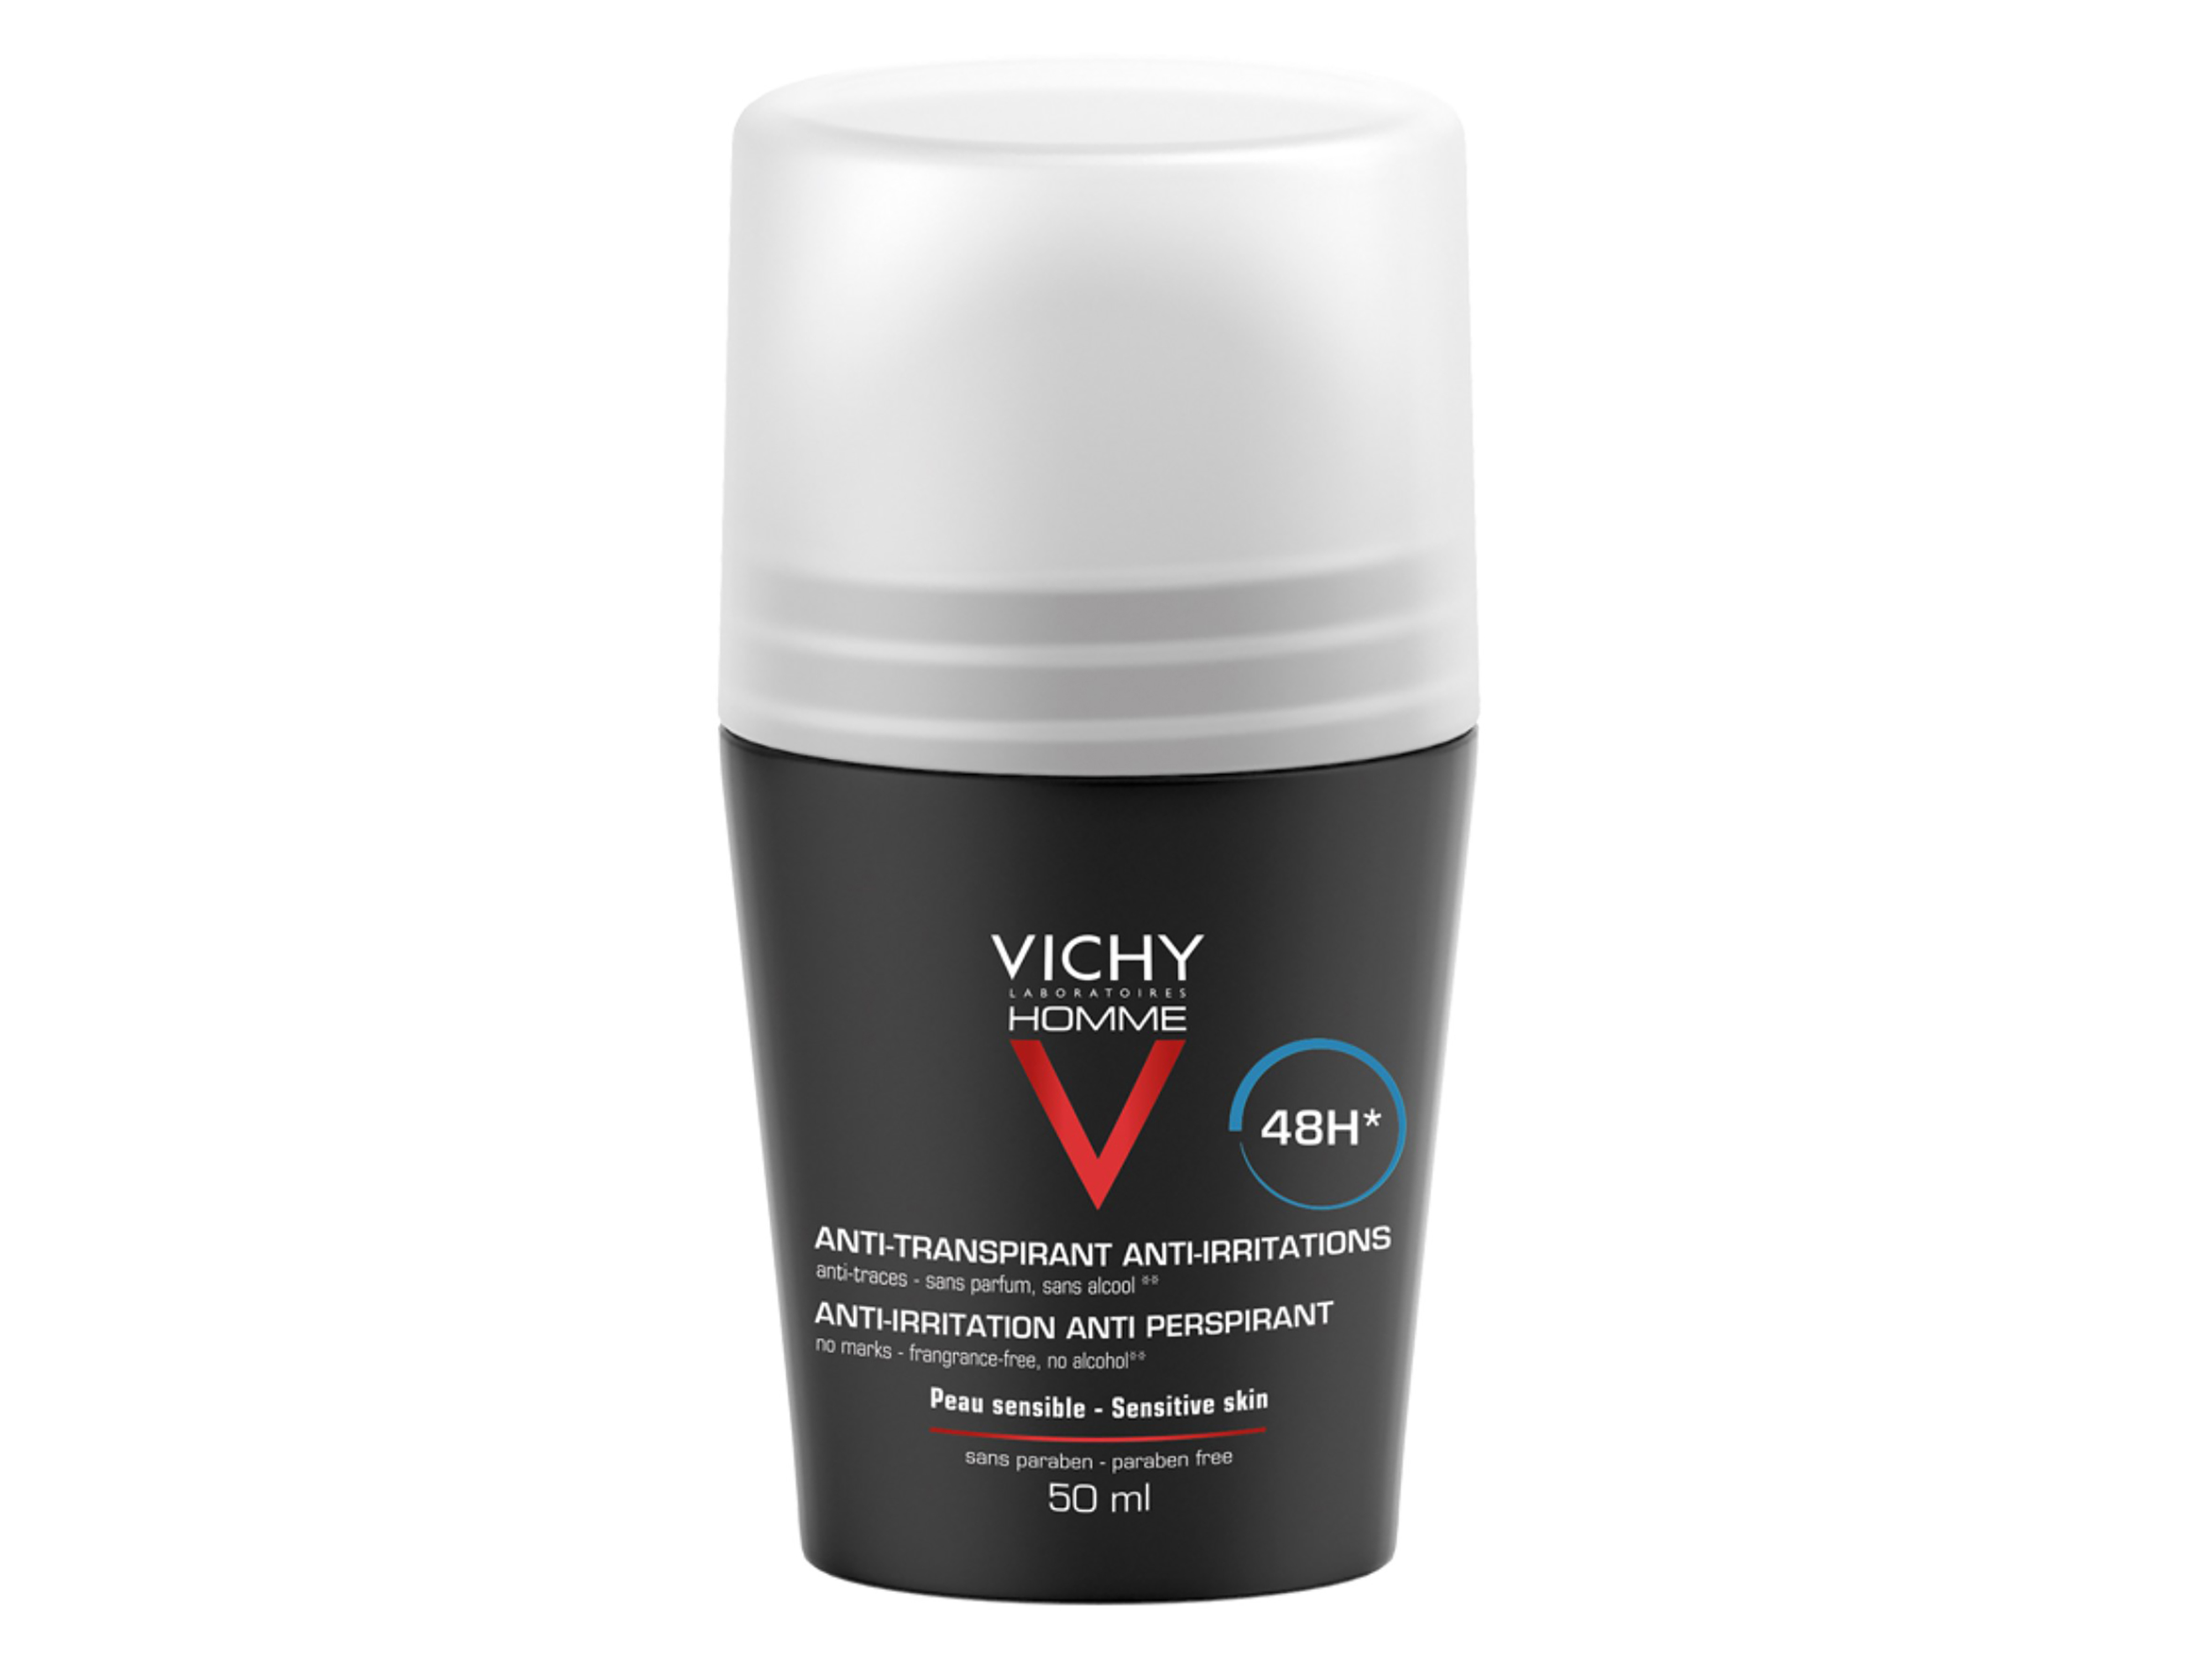 Vichy Homme Anti-Perspirant Anti-Irritation 48H, 50 ml